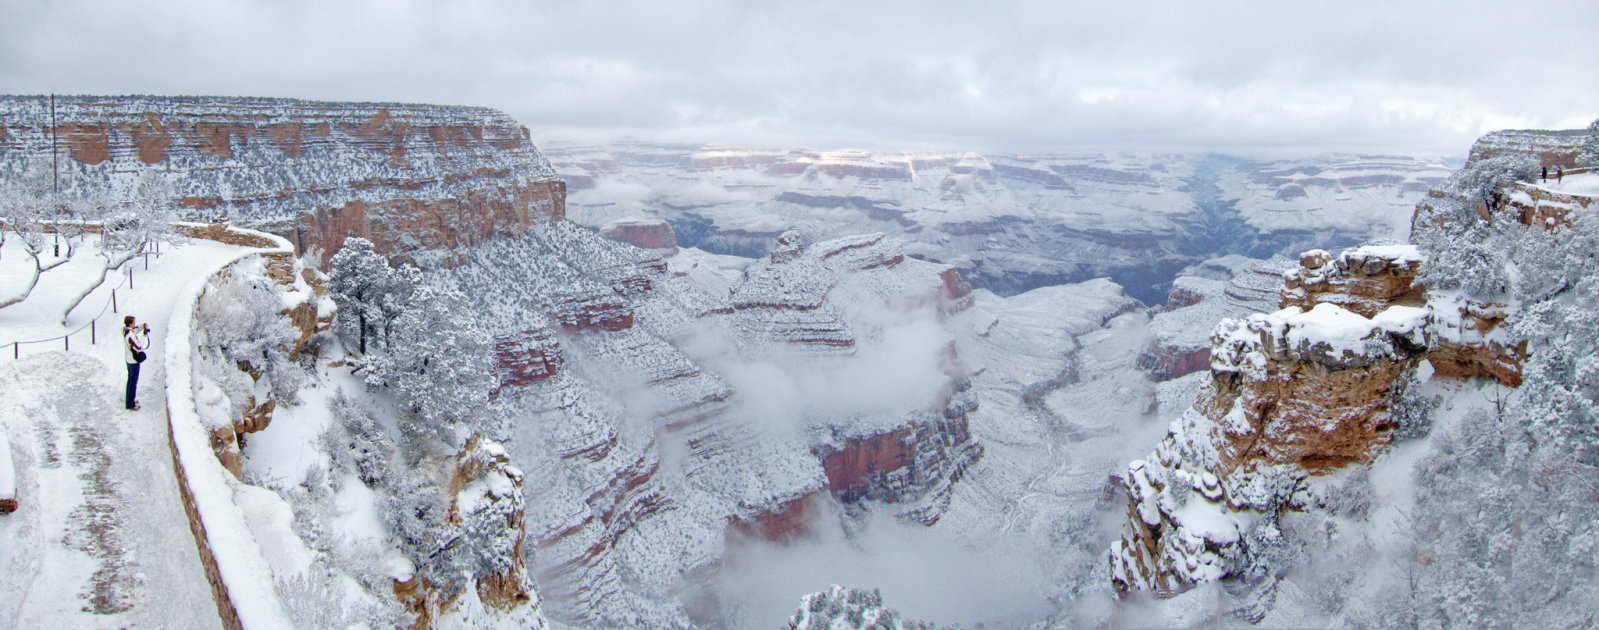 Kép: Grand Canyon National Park